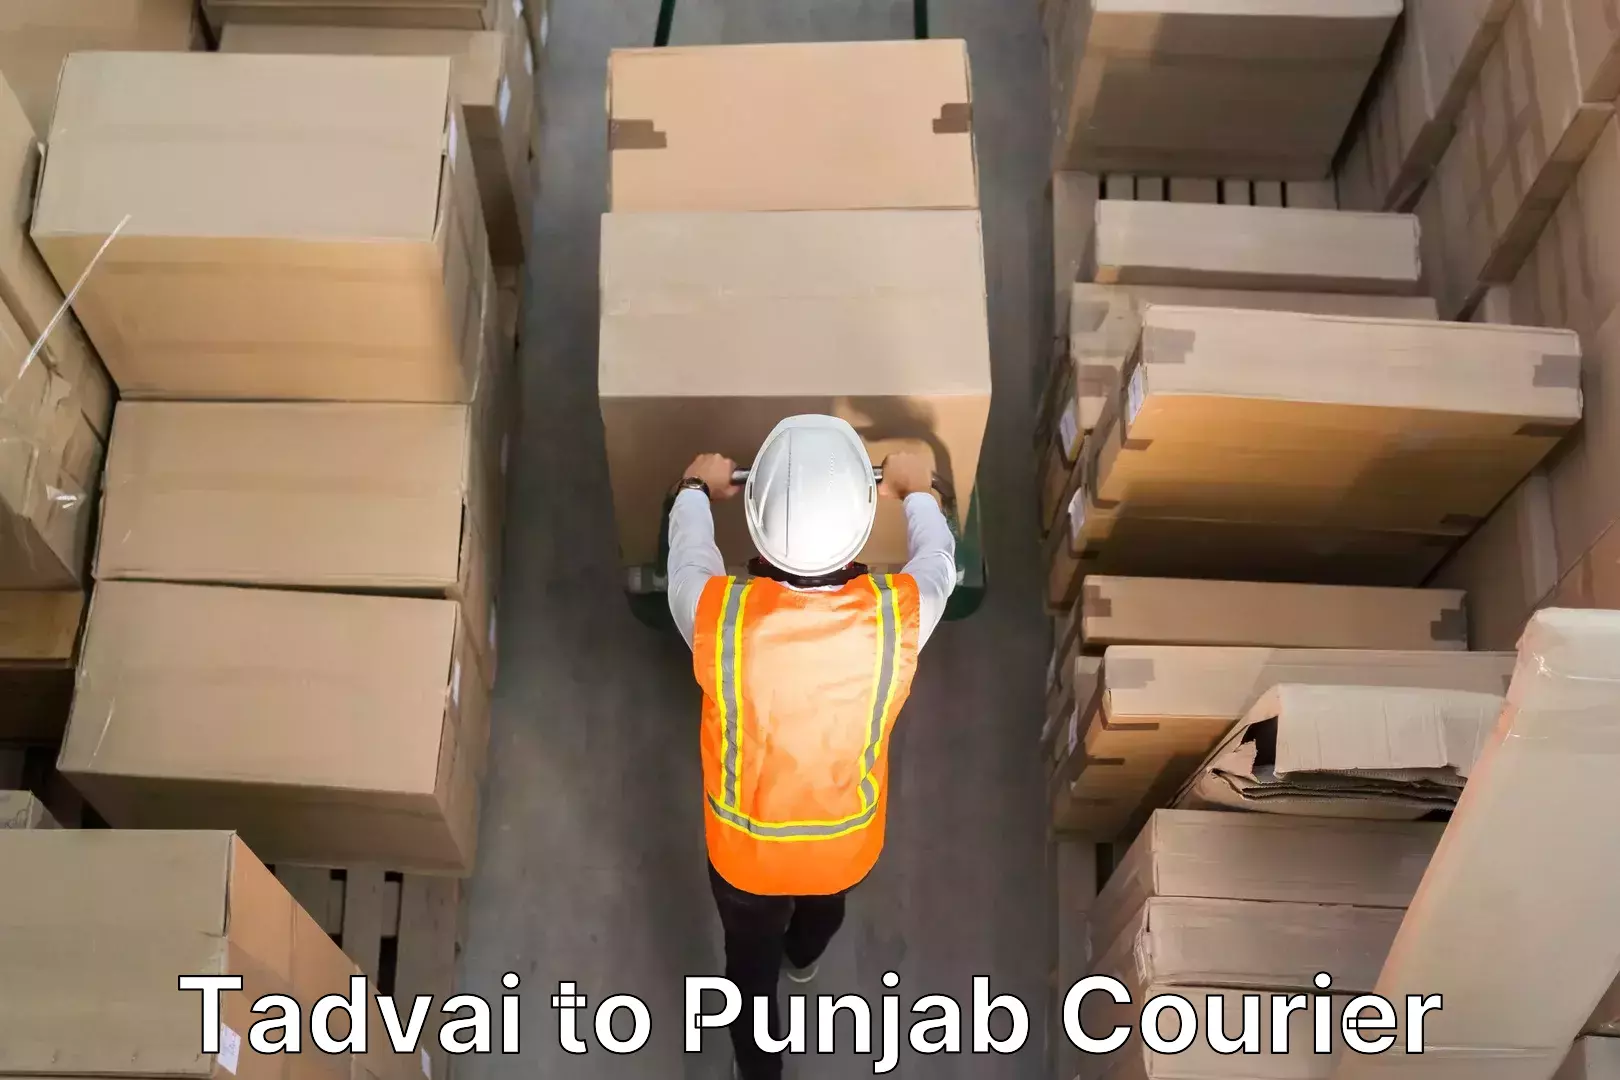 Efficient moving company Tadvai to Punjab